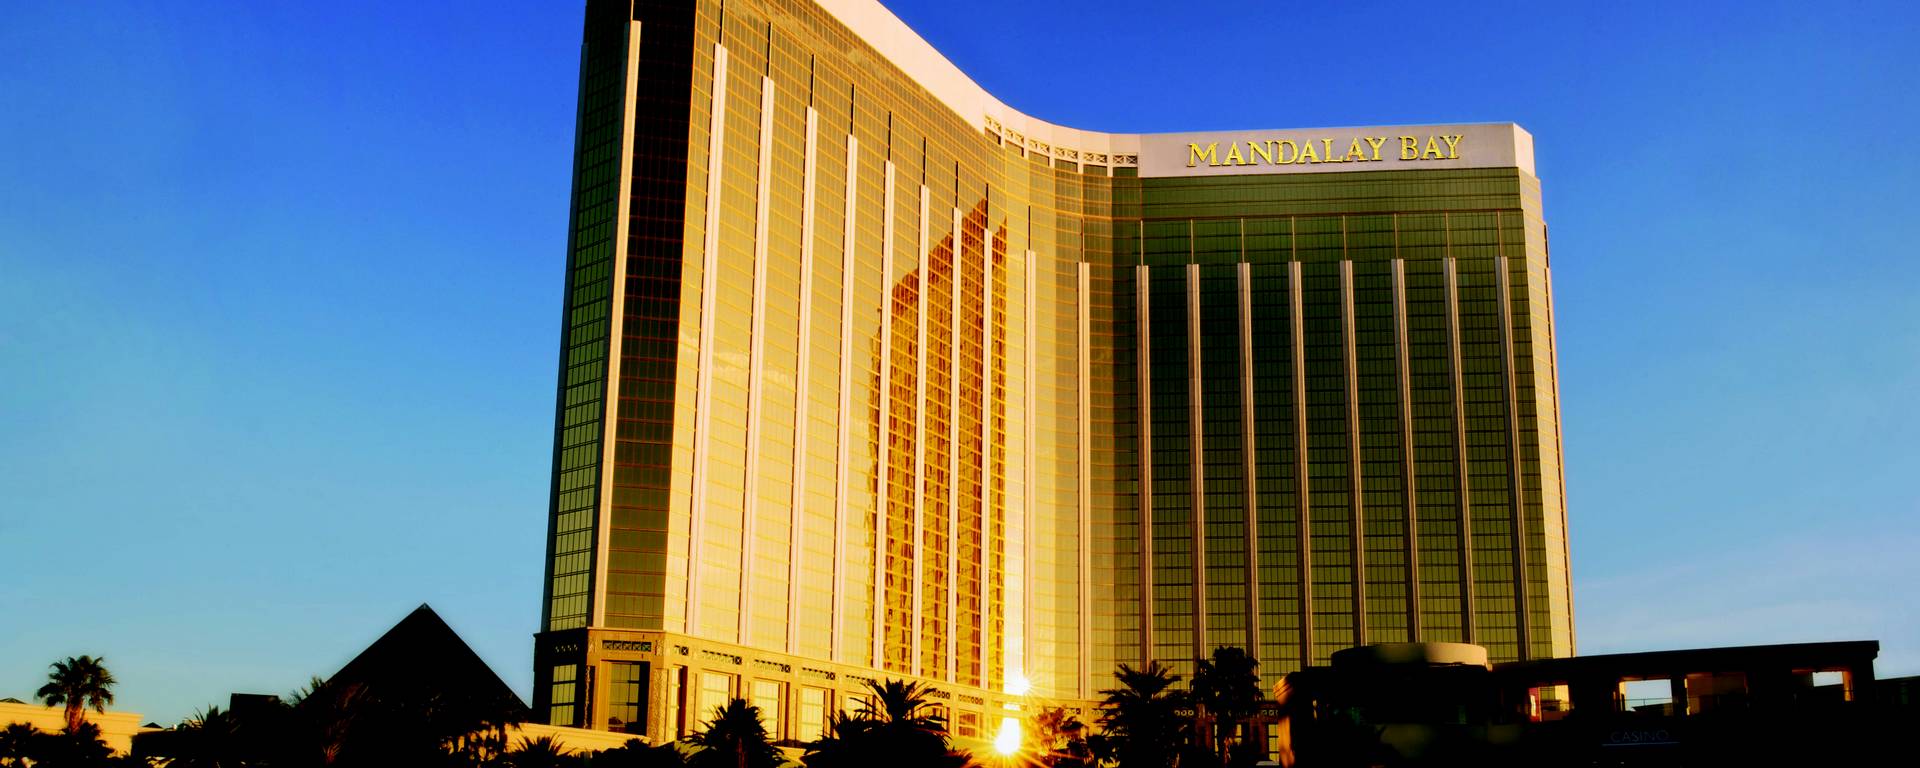 Mandalay Bay Hotel Las Vegas Deals Promo Codes Discounts